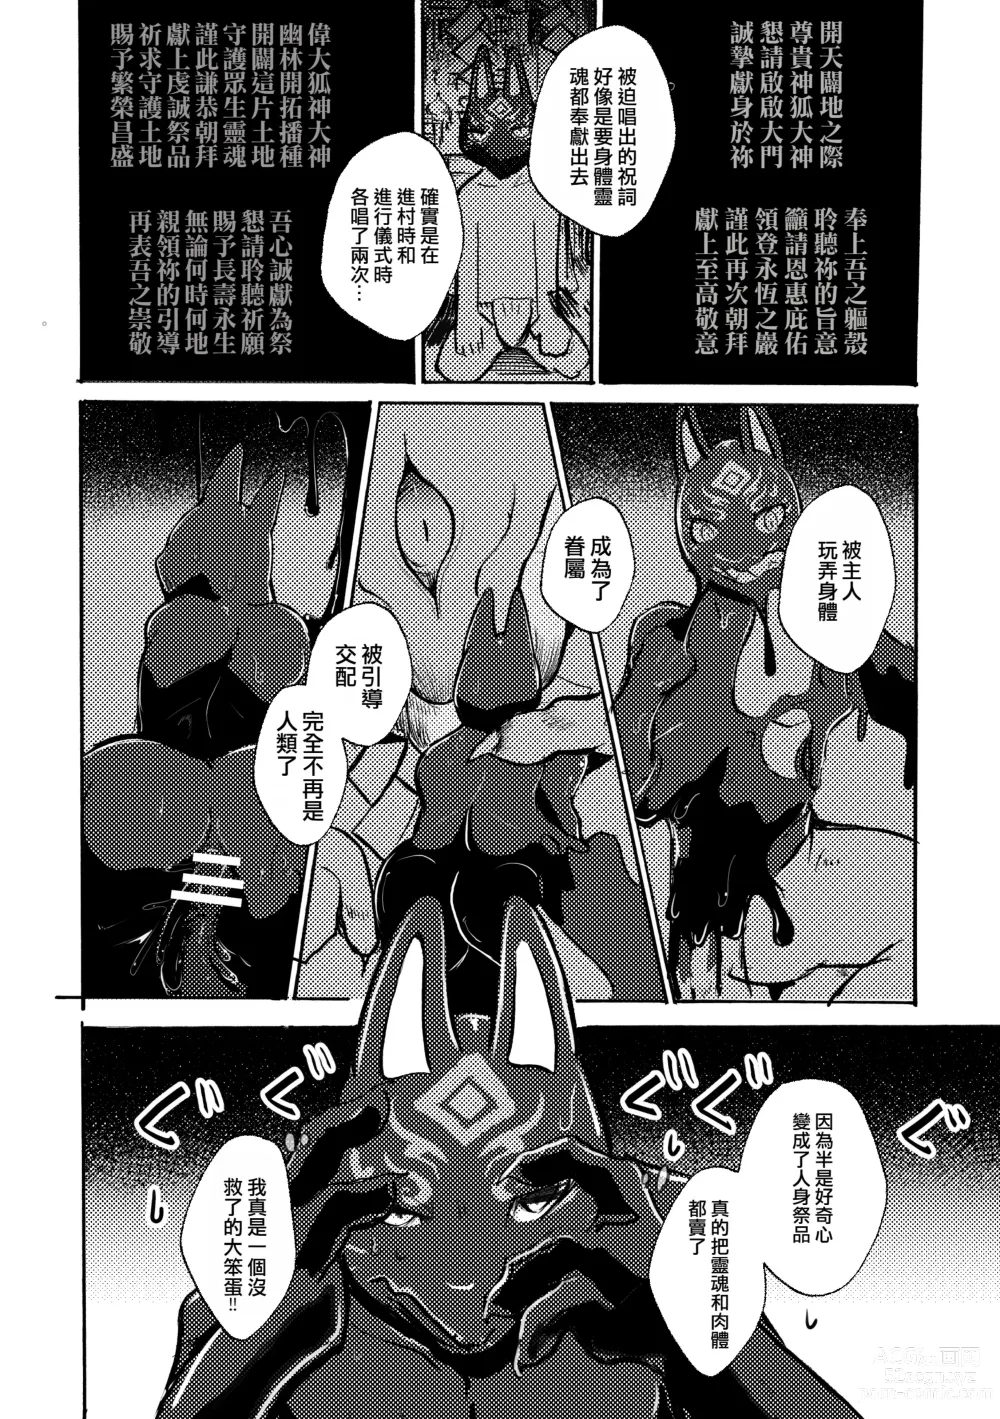 Page 7 of doujinshi 祭後纏深